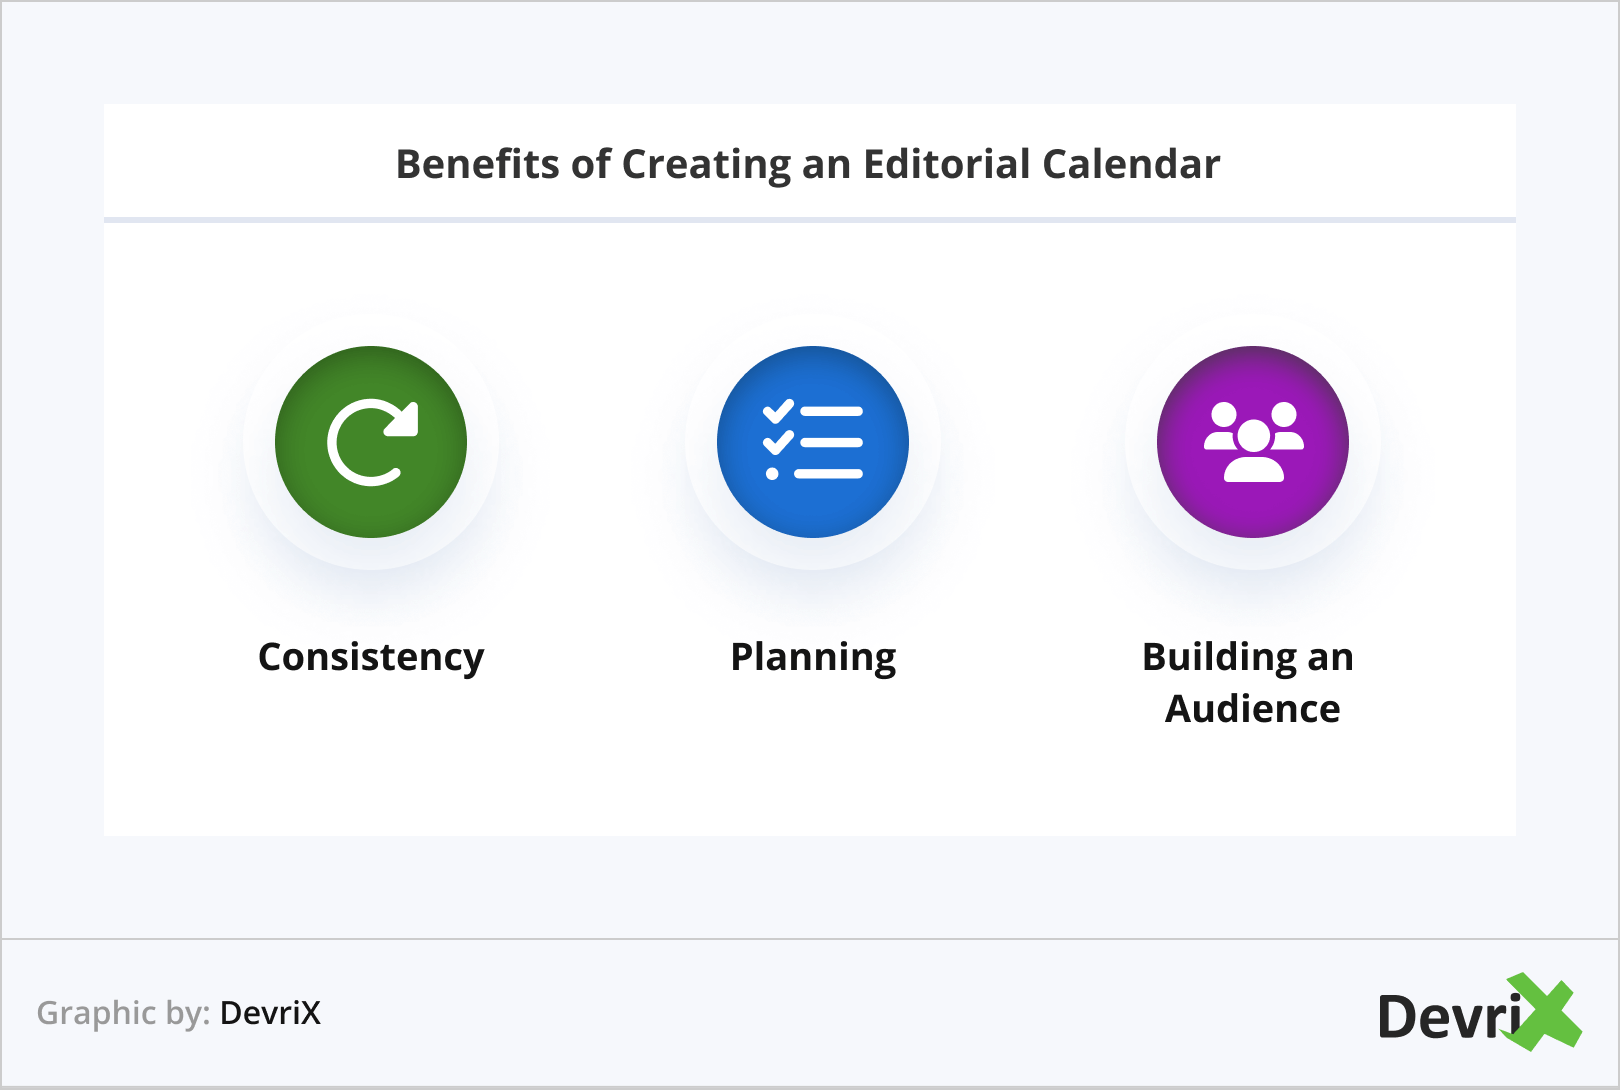 Benefits of Creating an Editorial Calendar